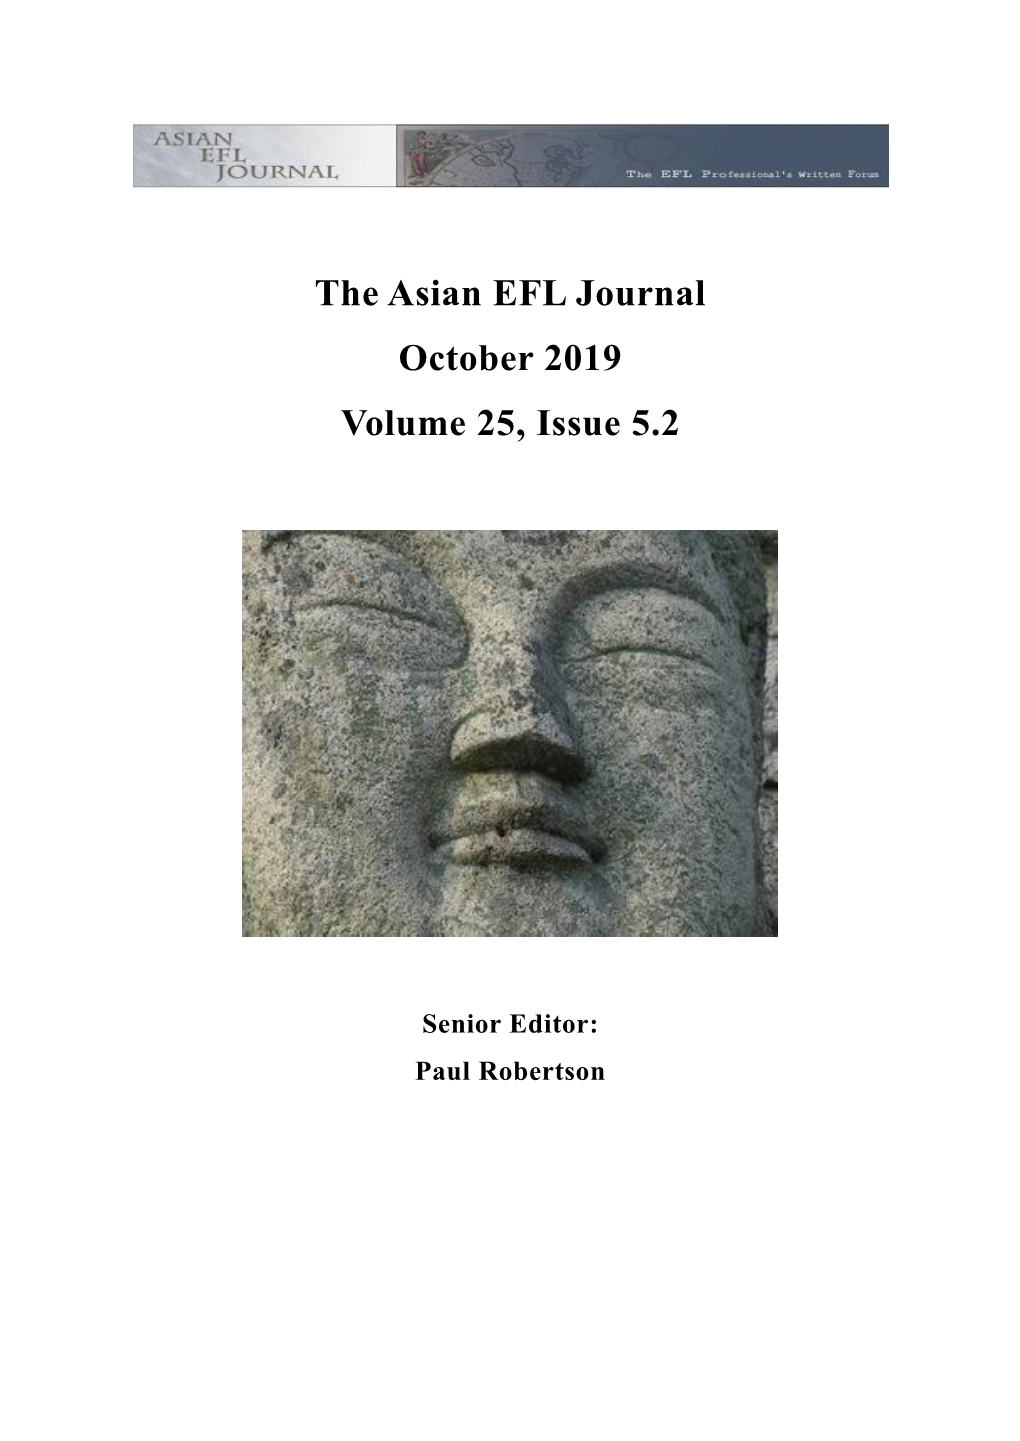 The Asian EFL Journal October 2019 Volume 25, Issue 5.2